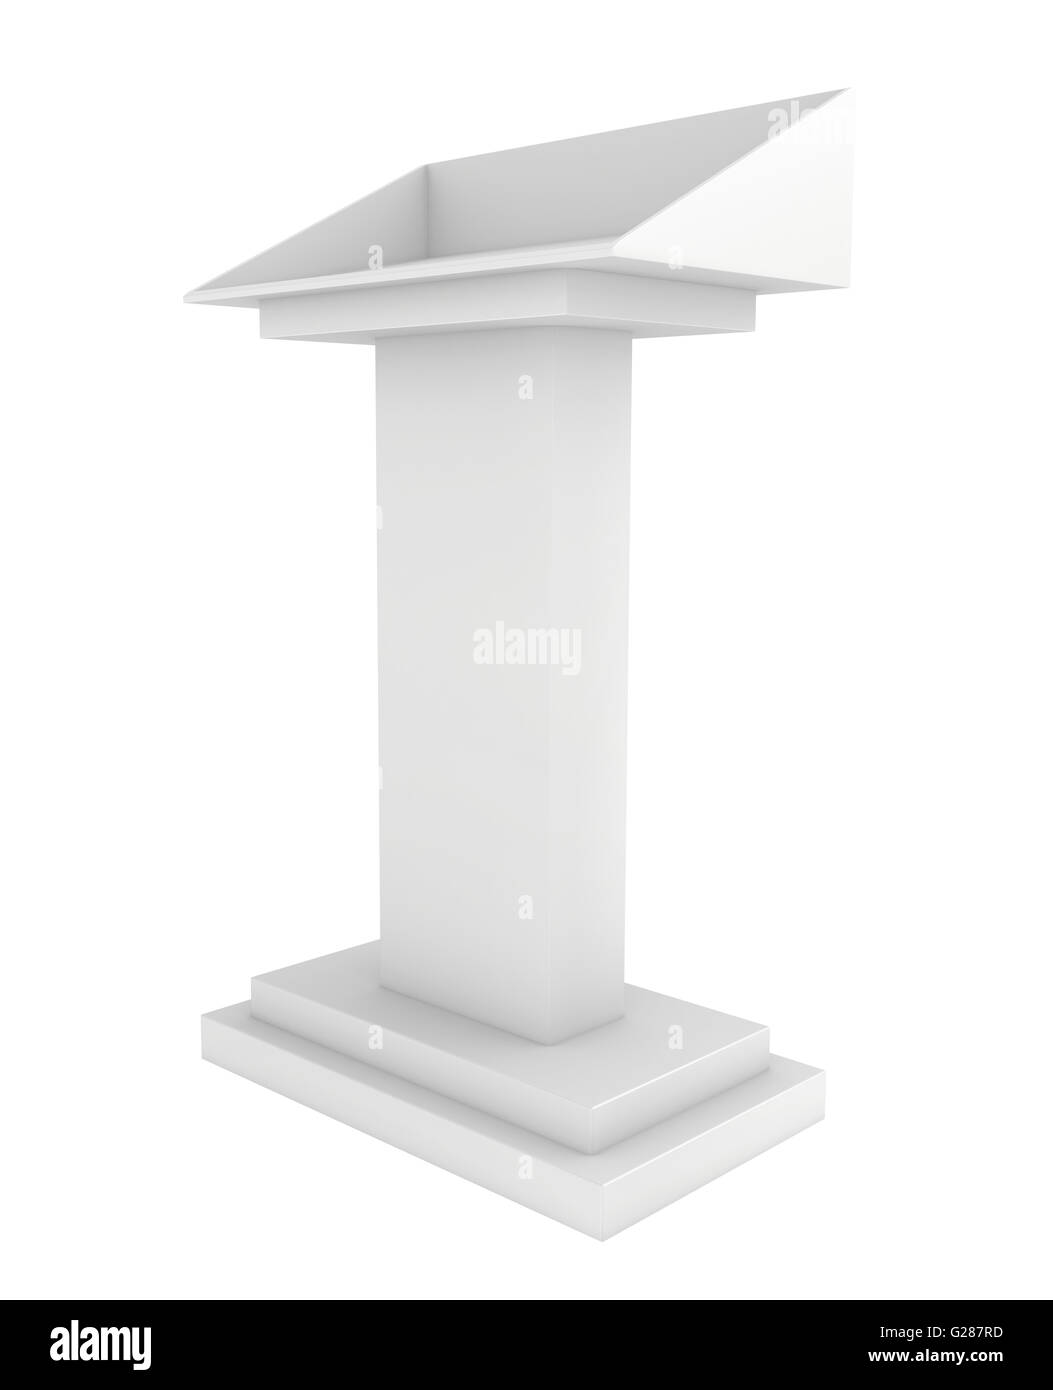 Speaker podium tribune rostrum stand. Isolated on white background. Debate, press conference. Stock Photo